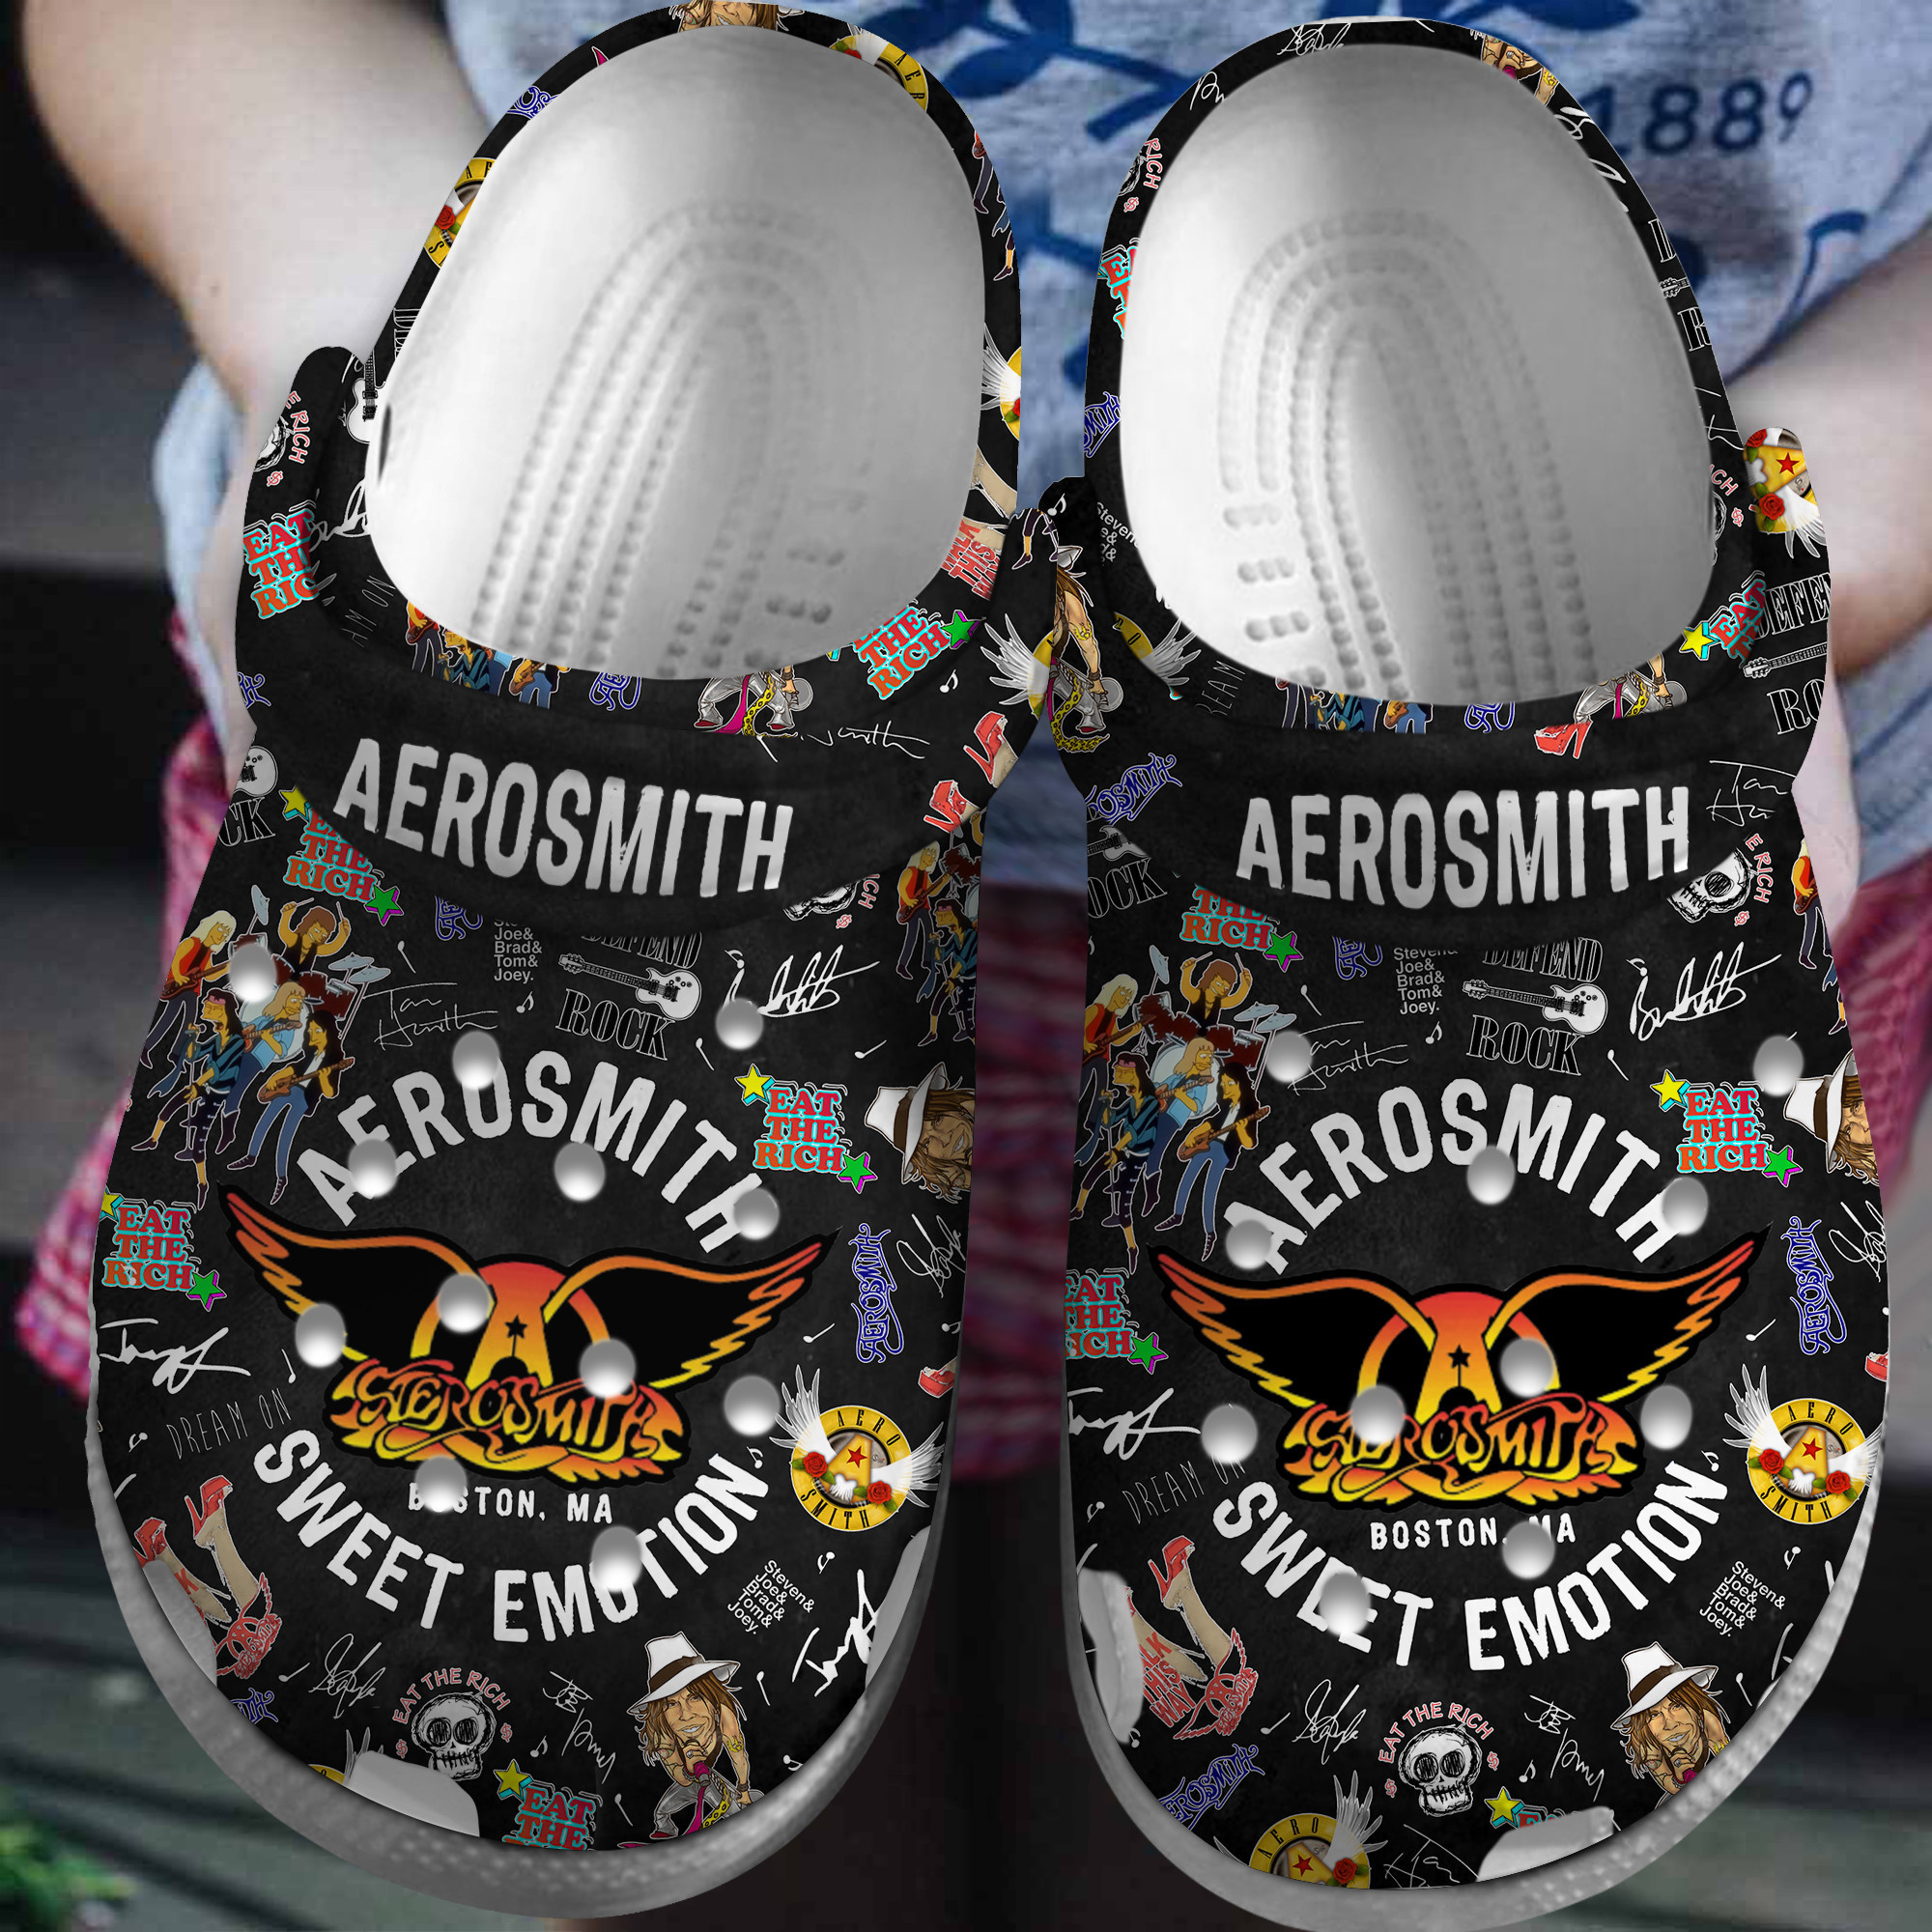 Aerosmith Music Crocs Crocband Clogs Shoes Comfortable For Men Women and Kids 2